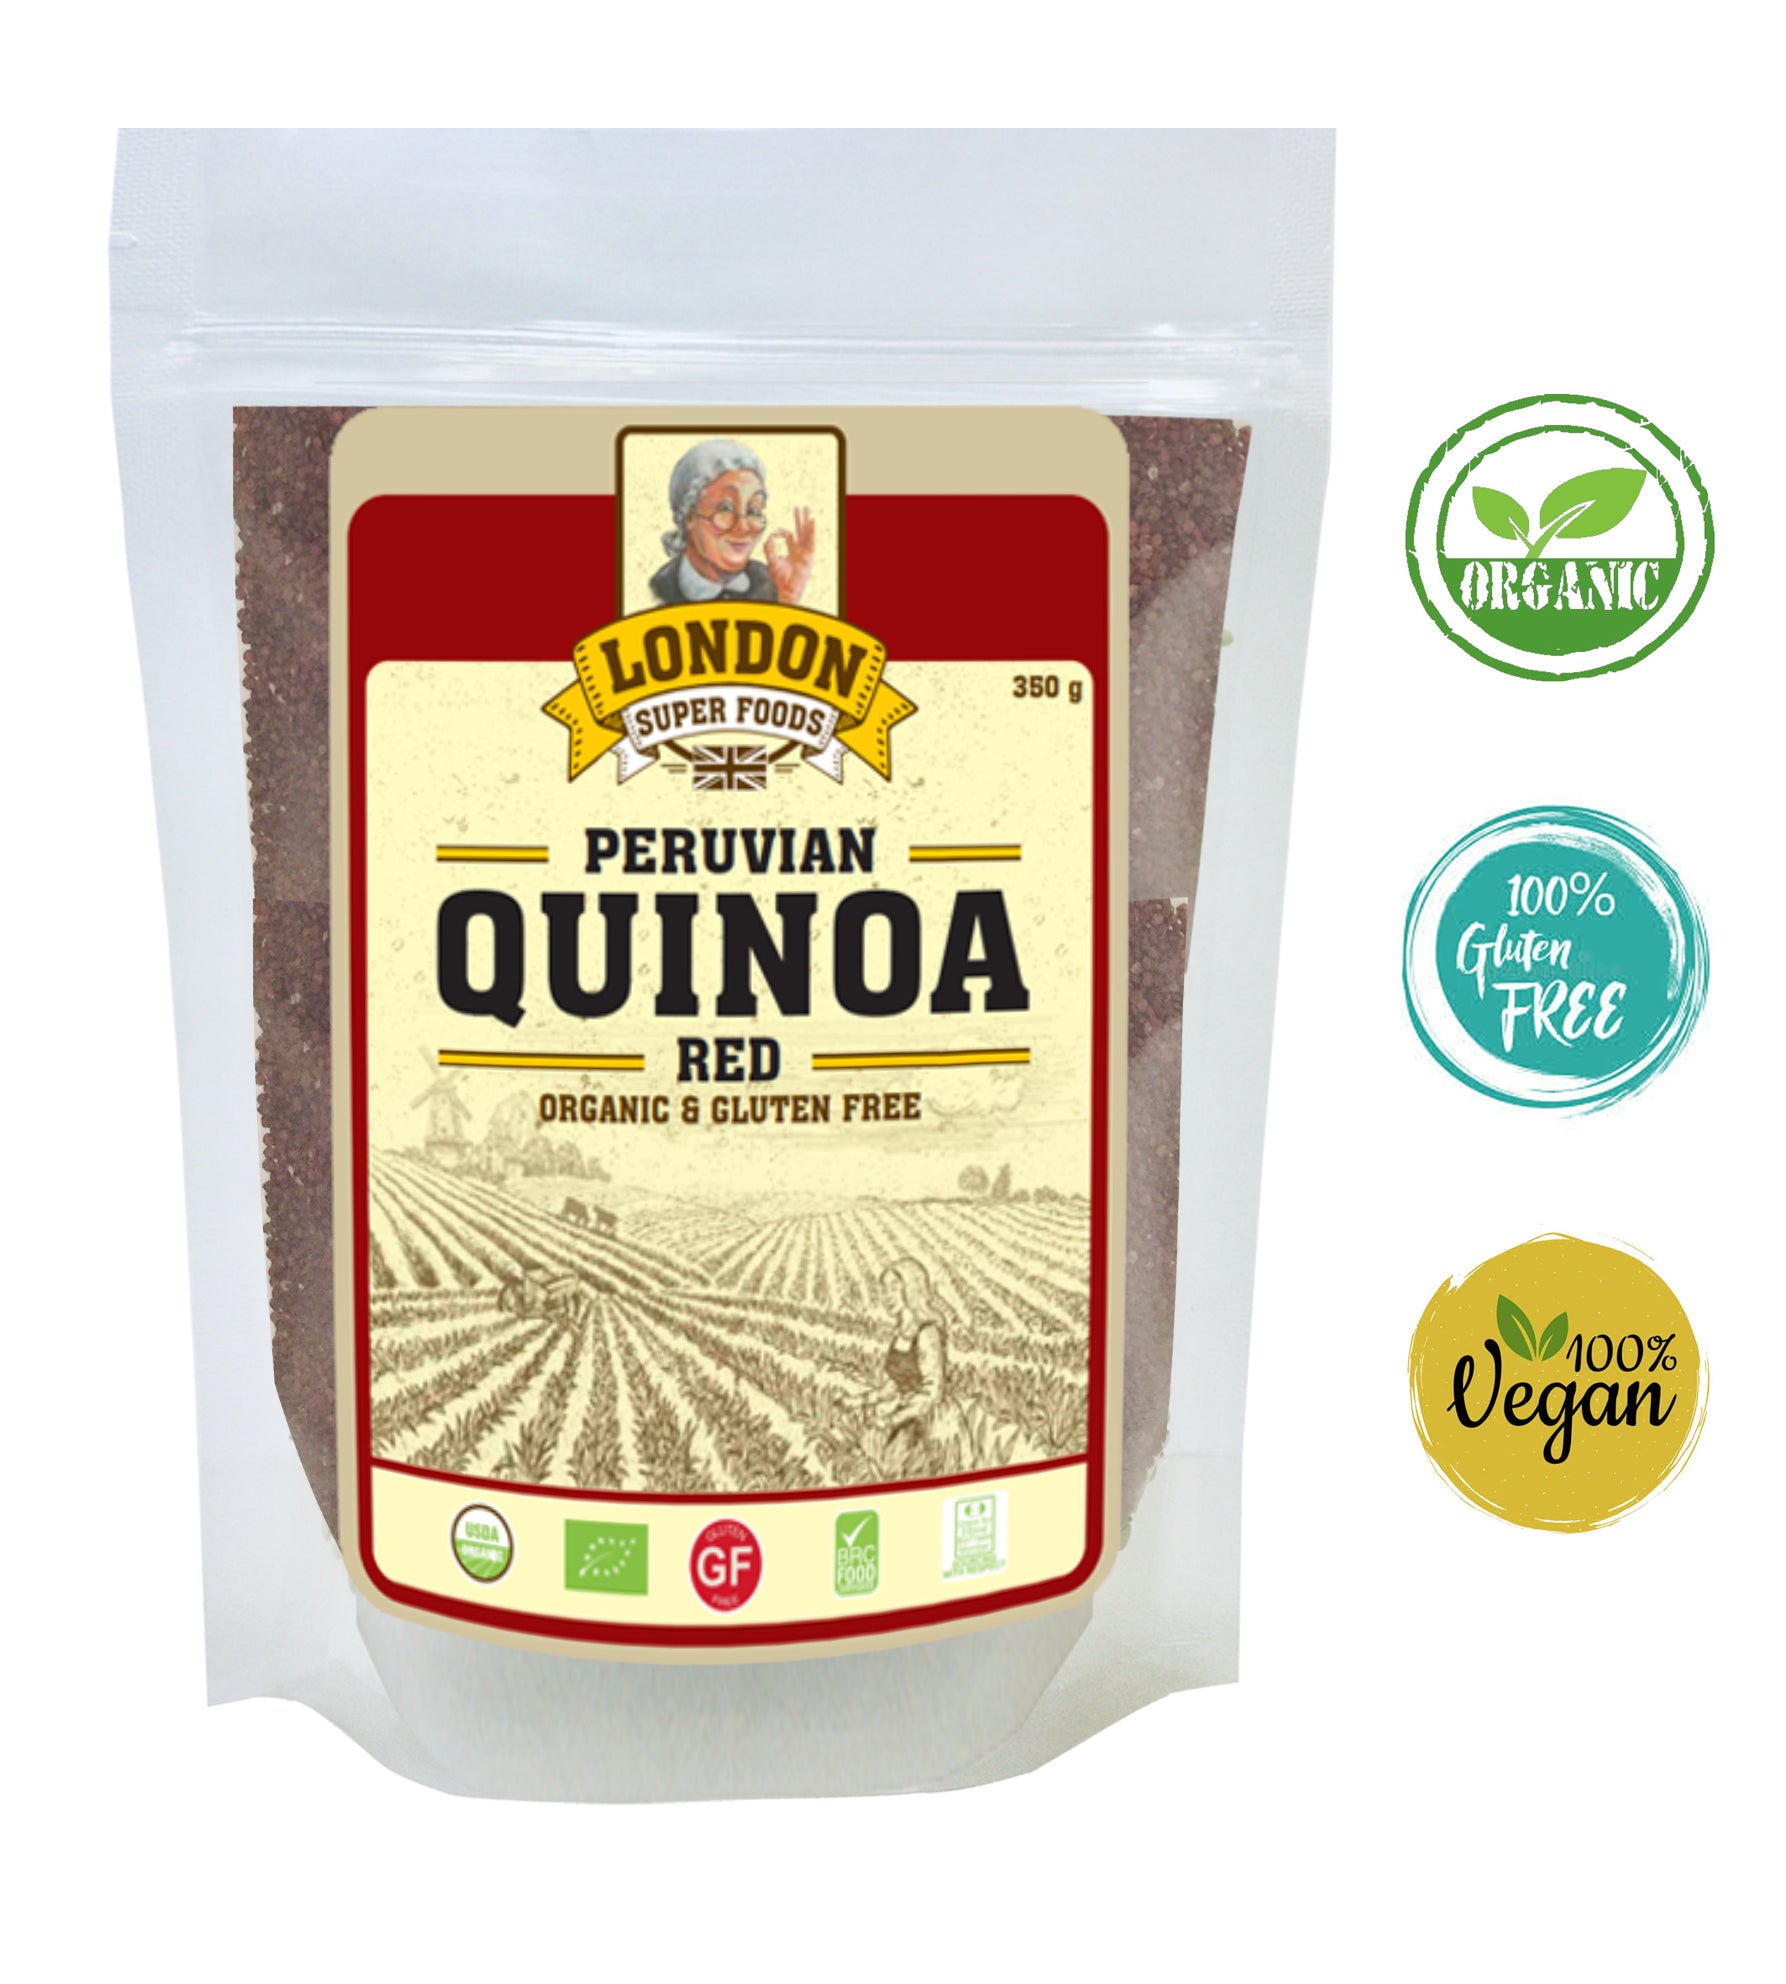 LONDON SUPER FOODS Peruvian Organic Red Quinoa, 350g -  Gluten Free